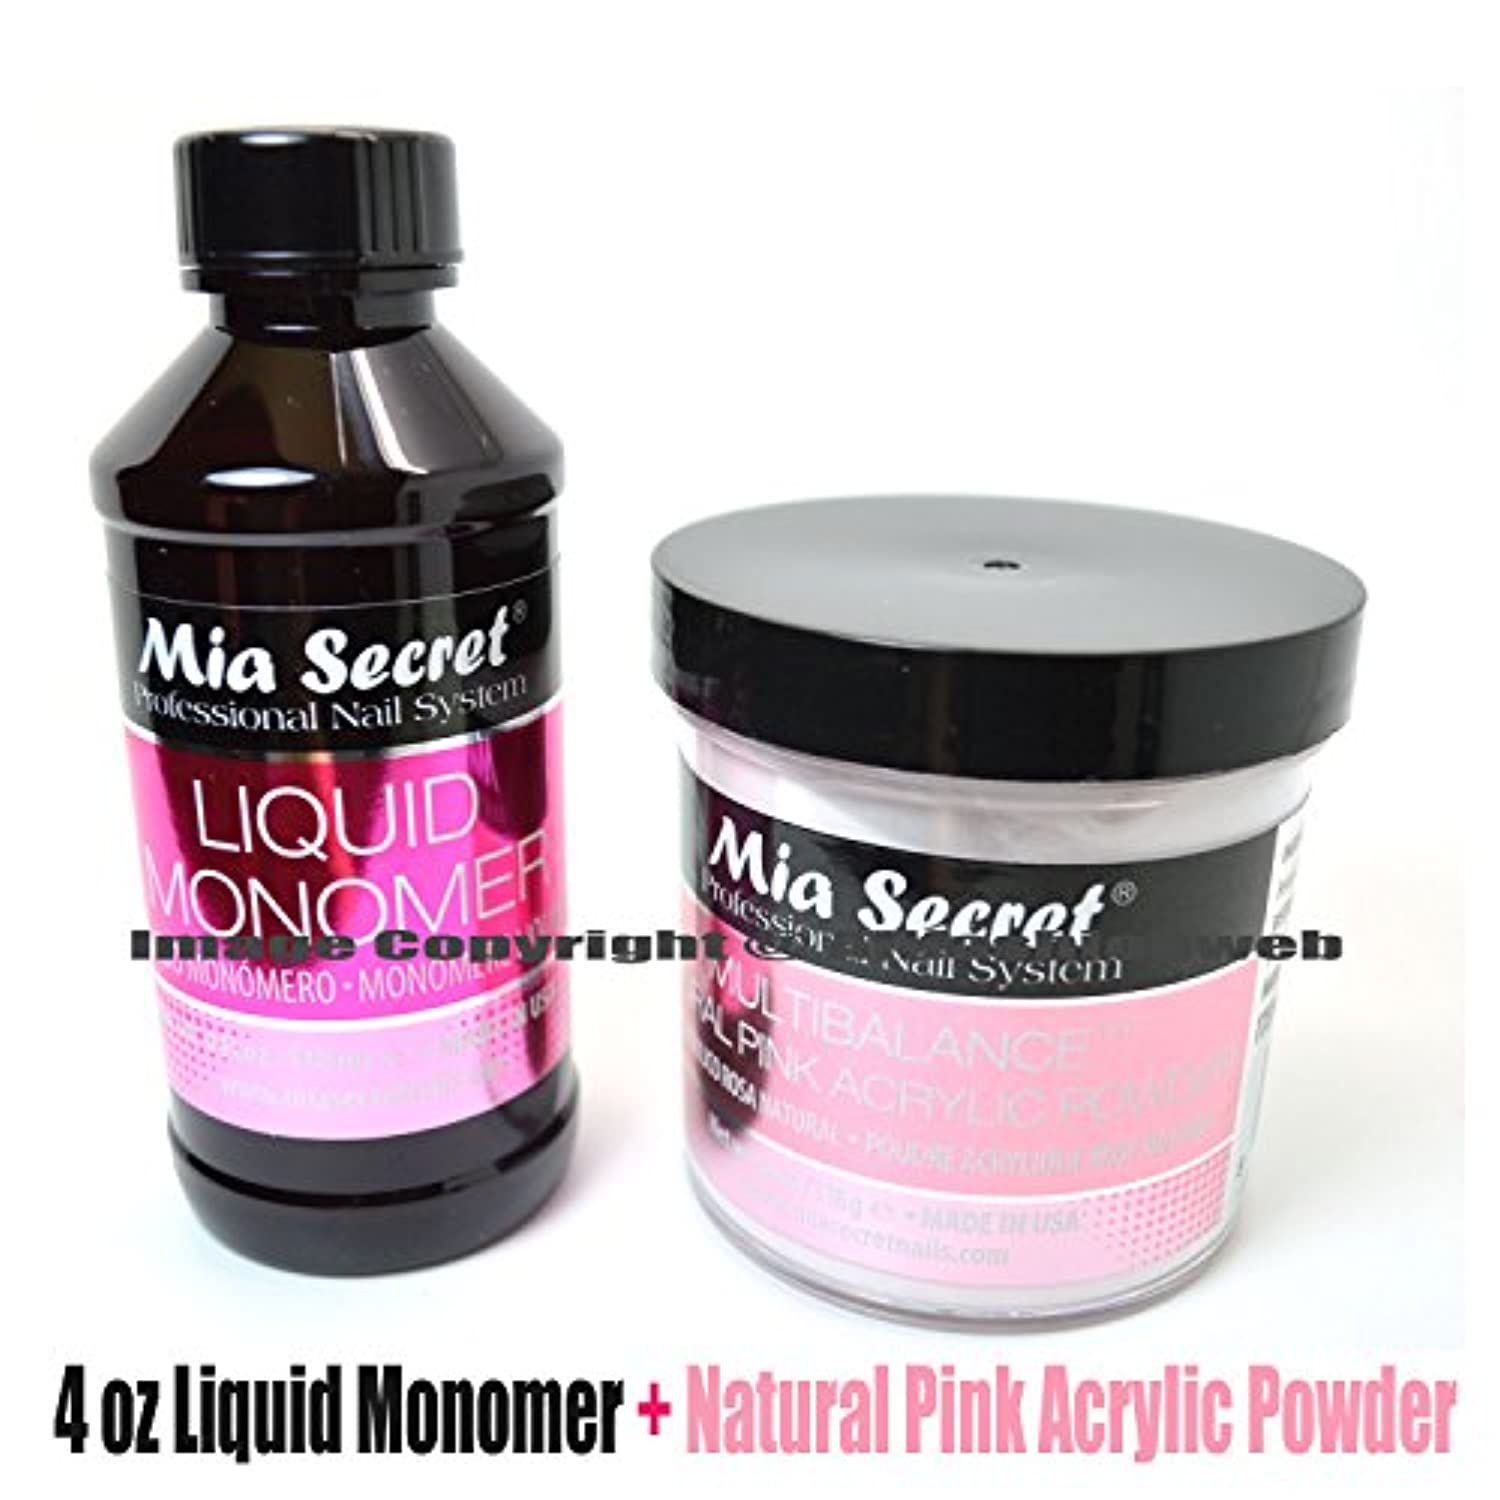 MIA SECRET 4oz LIQUID MONOMER + 4oz NATURAL PINK ACRYLIC POWDER NAIL ART SYSTEM